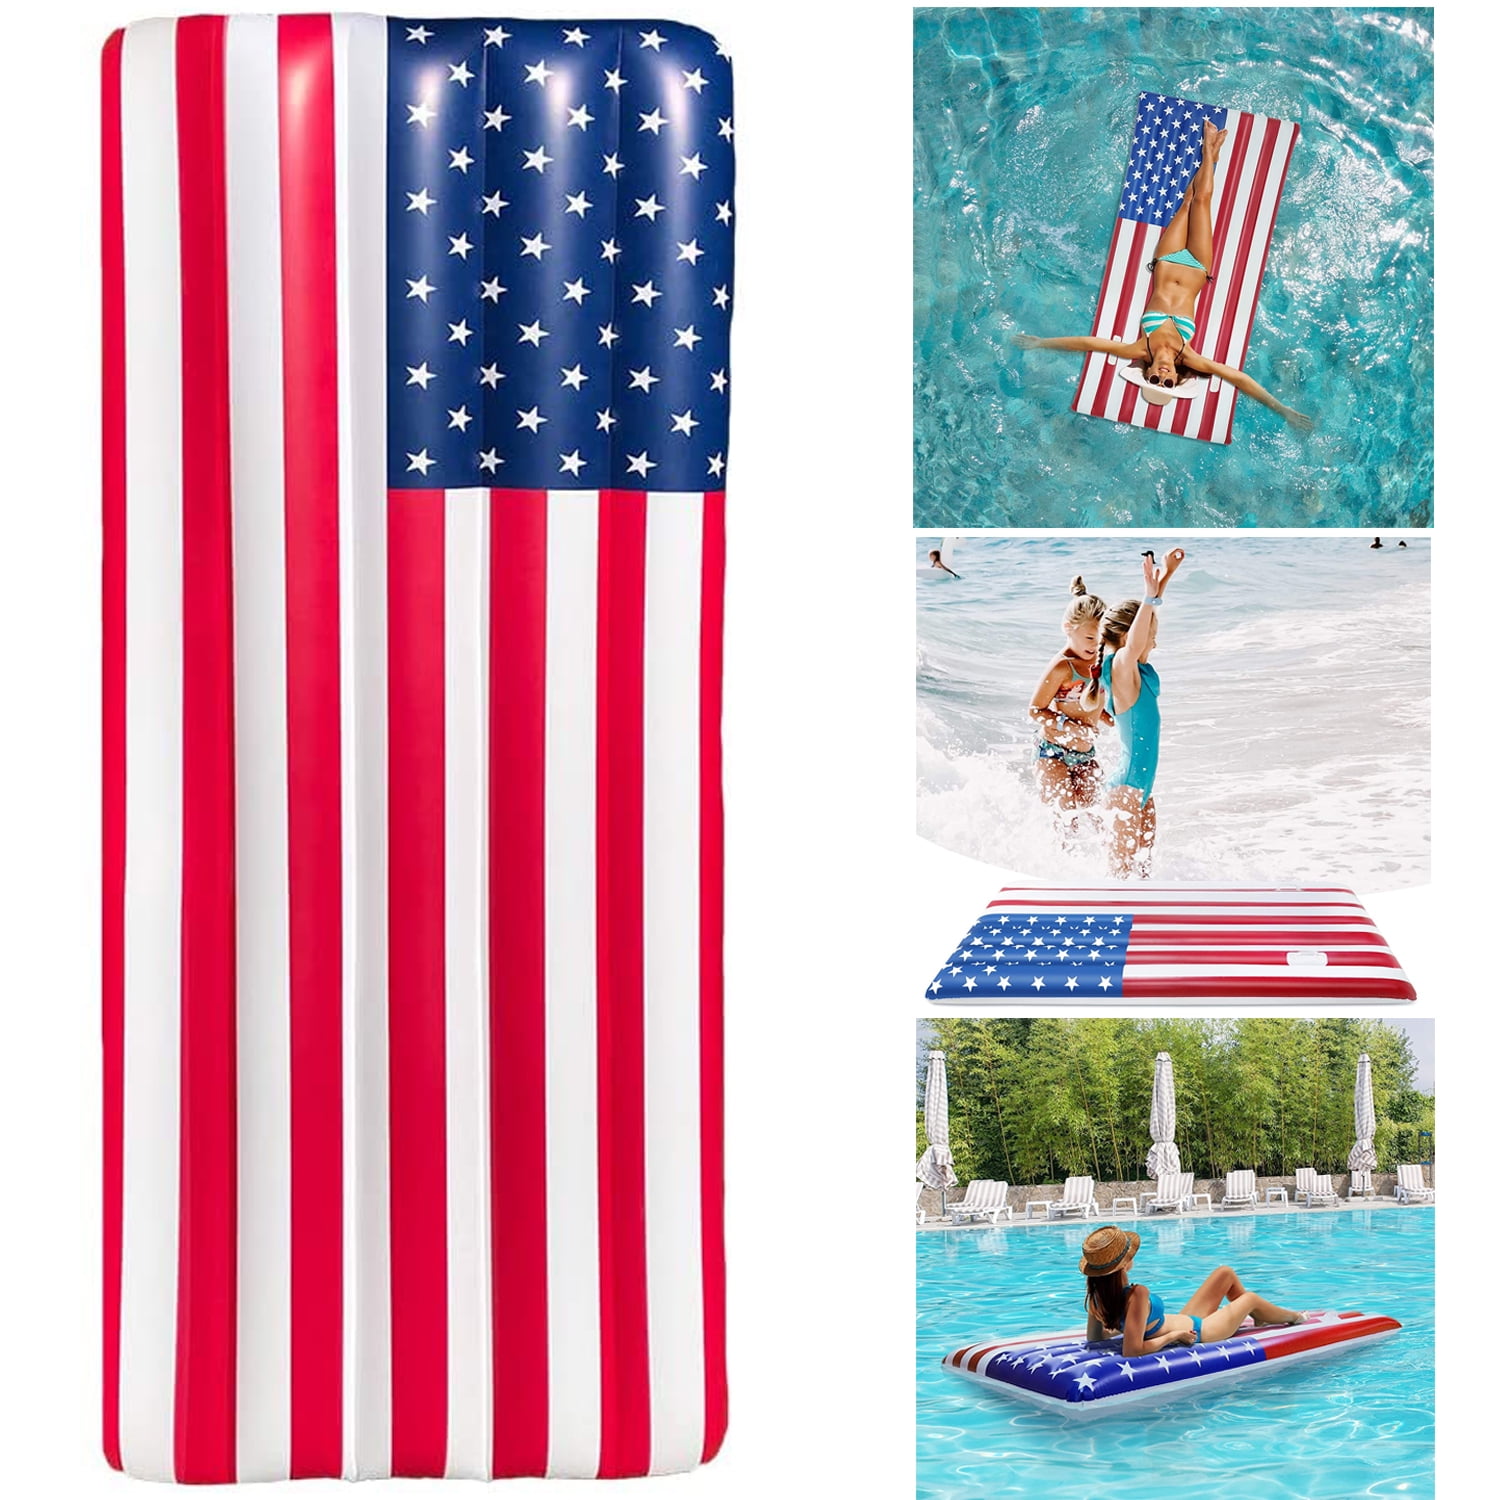 Large Pool Float American Flag Pool Sea Adult Inflatable Swimming Beach Floats 